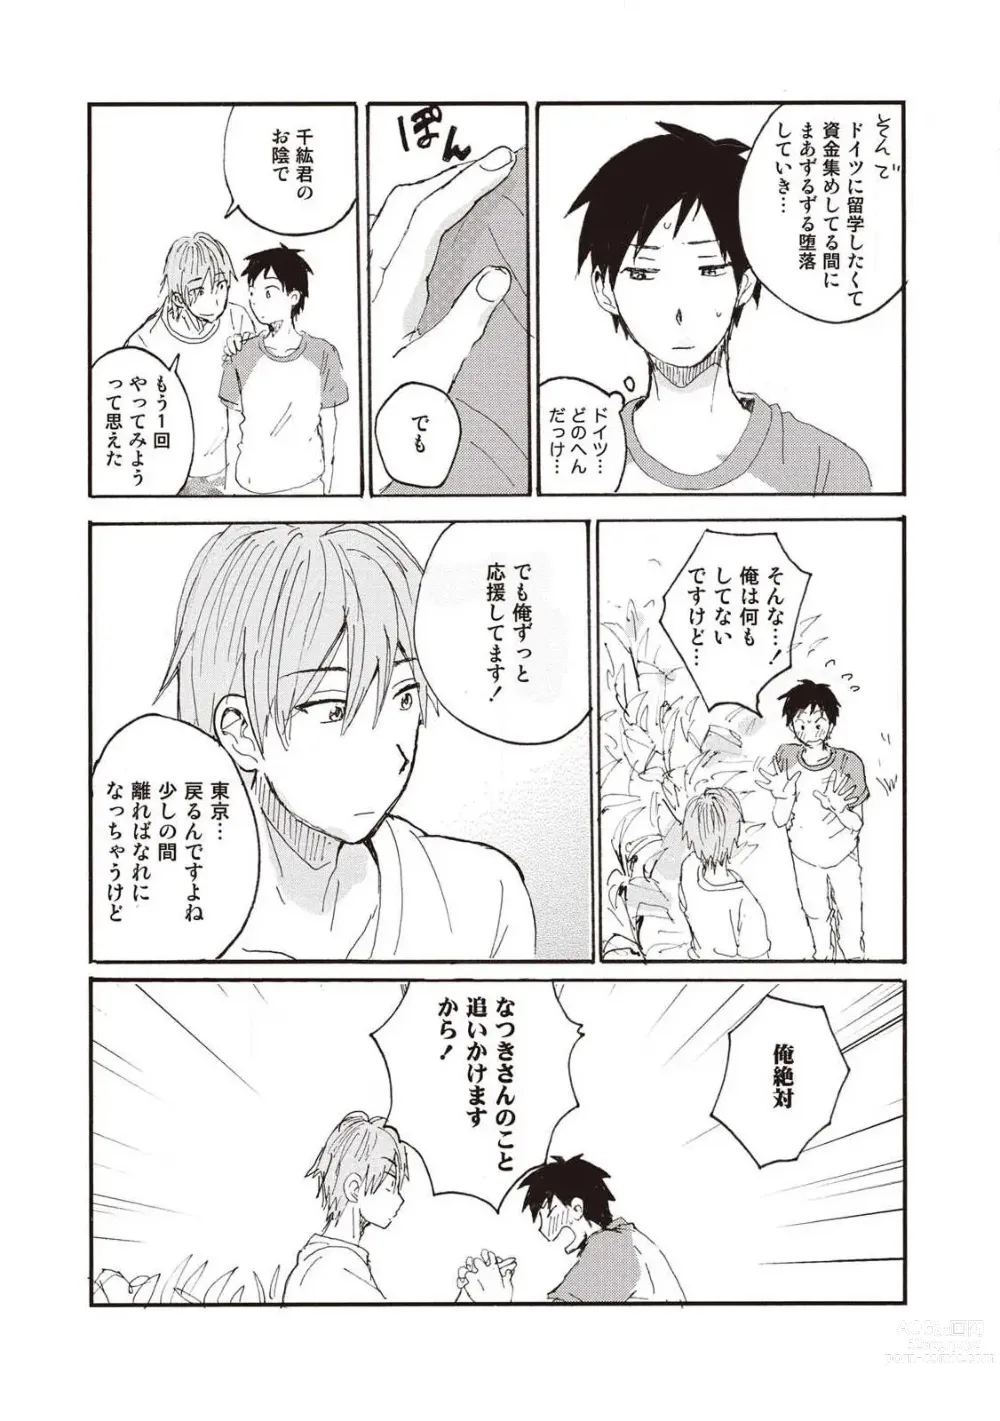 Page 166 of manga Hatomugi Batake de Tsukamaete - The Catcher in the Hato